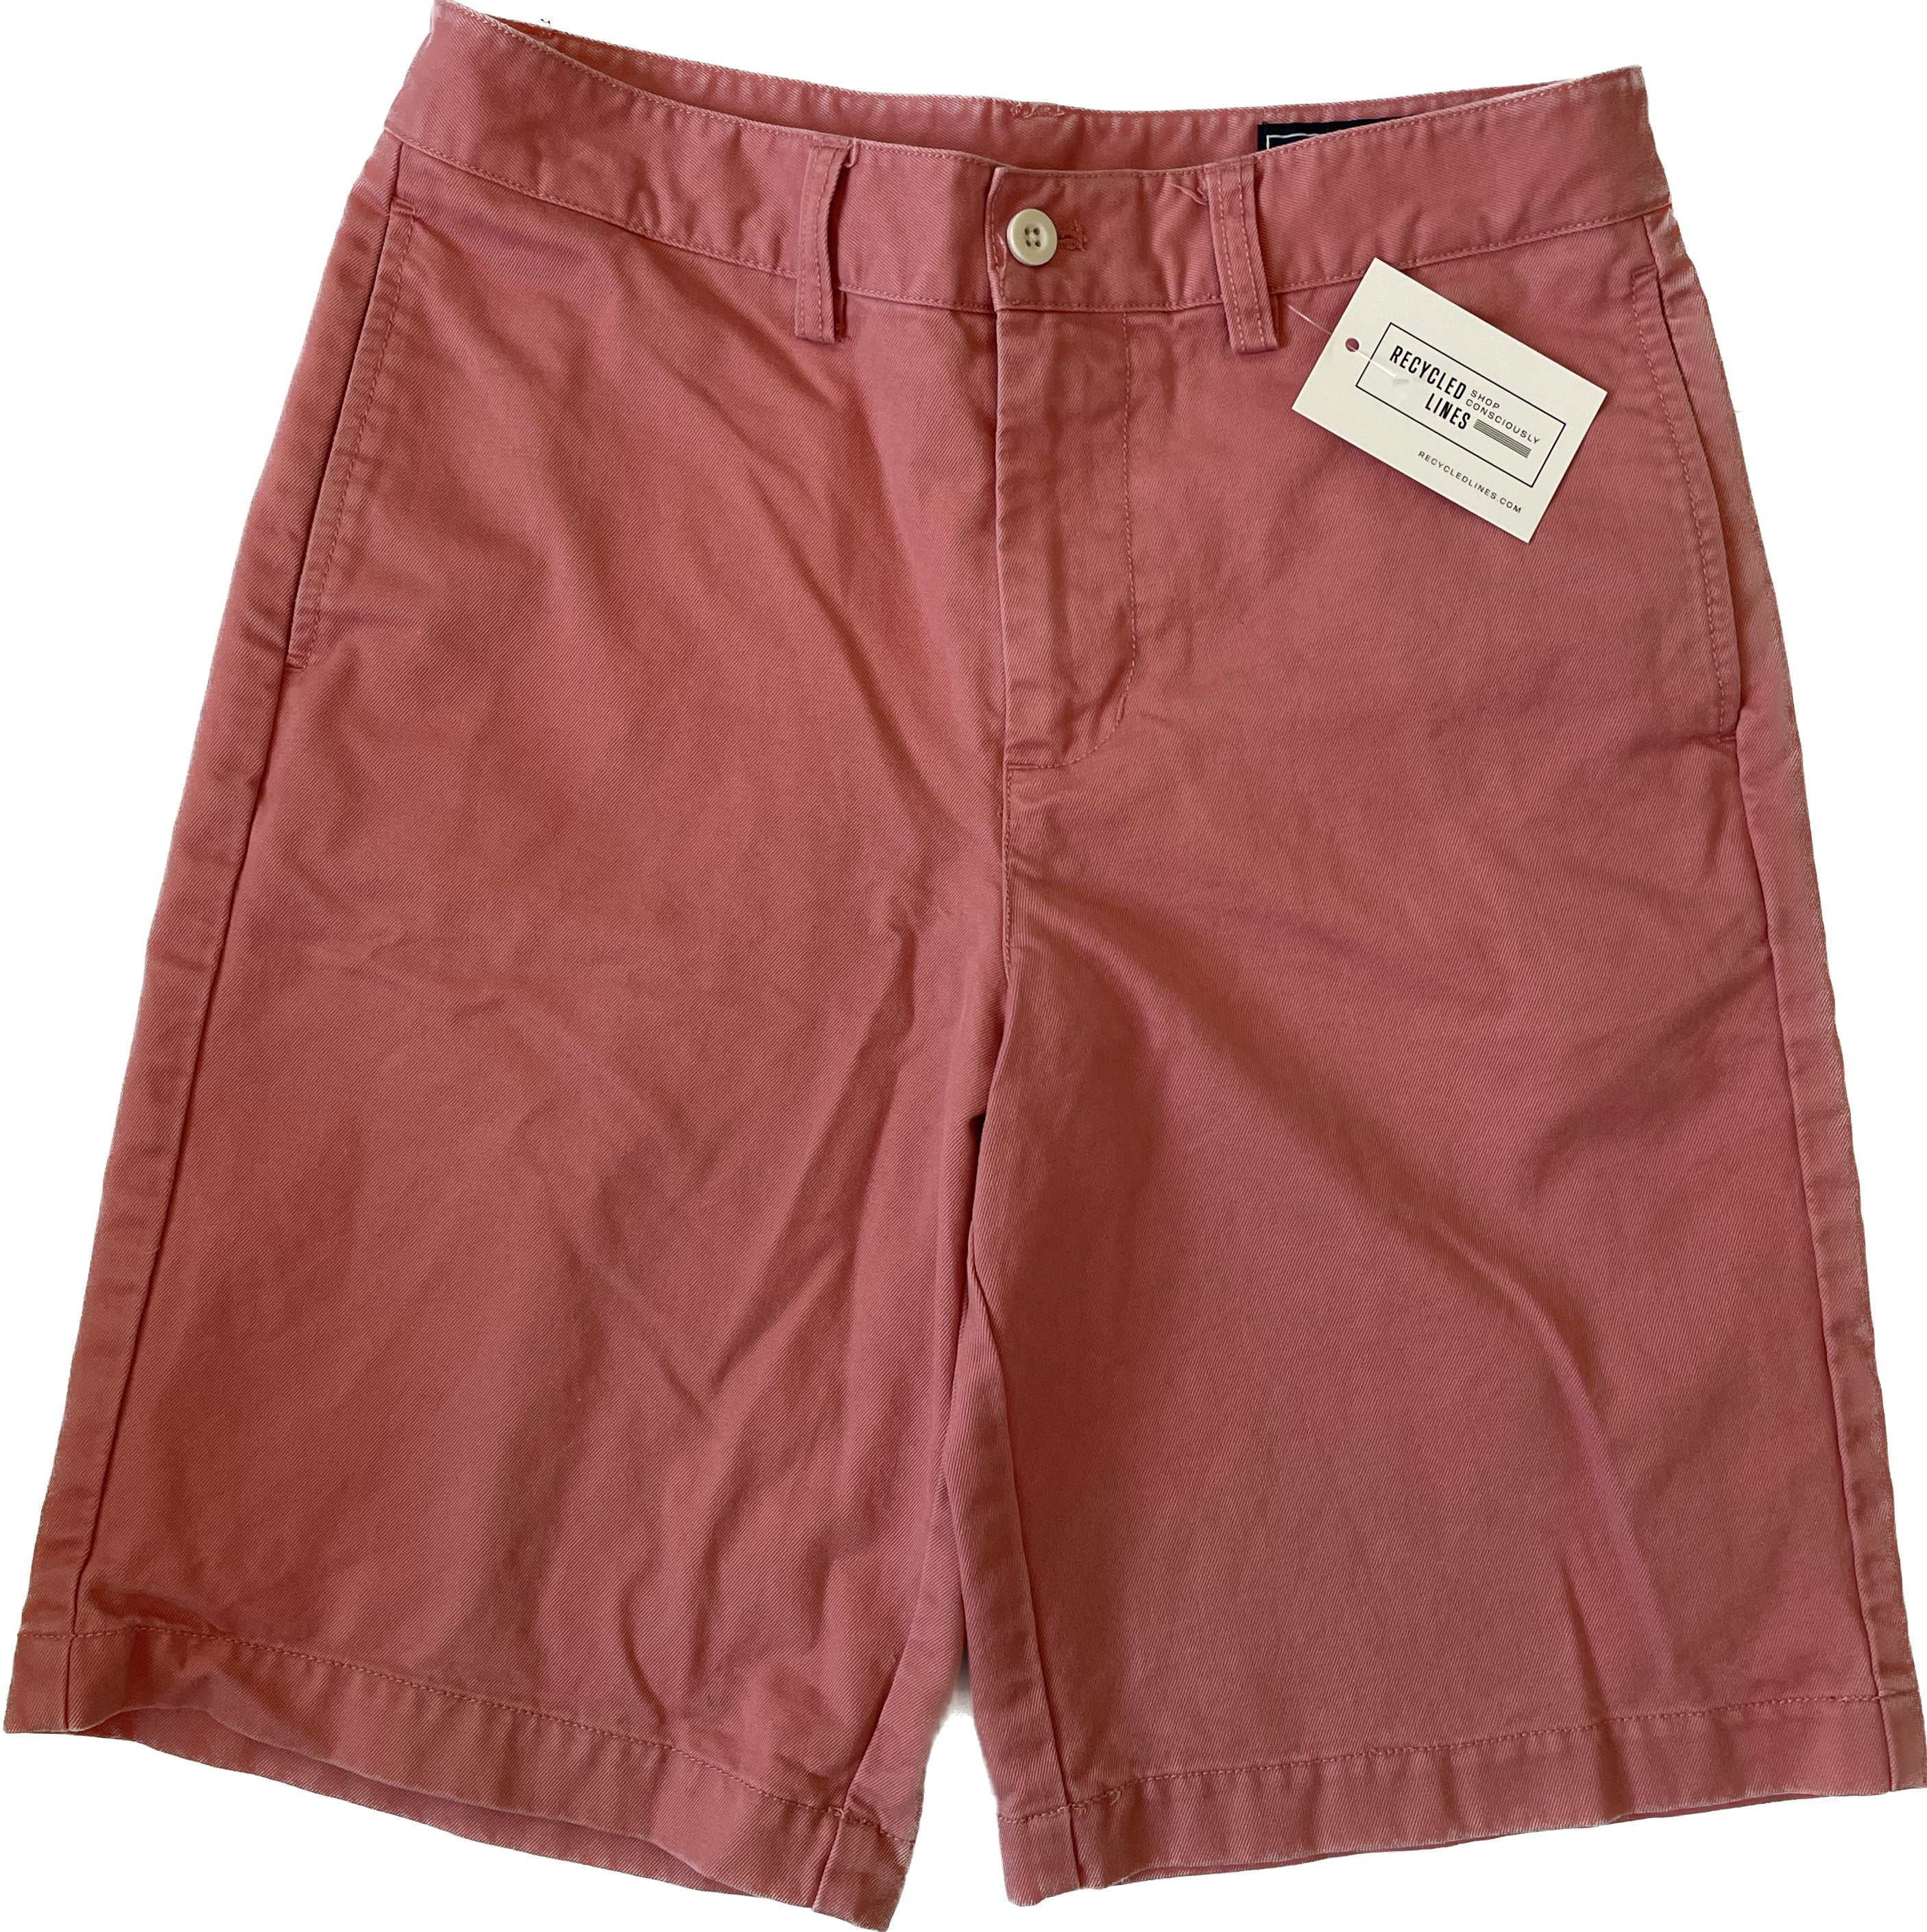 Vineyard Vines Shorts, Nantucket Red Boys Size 18